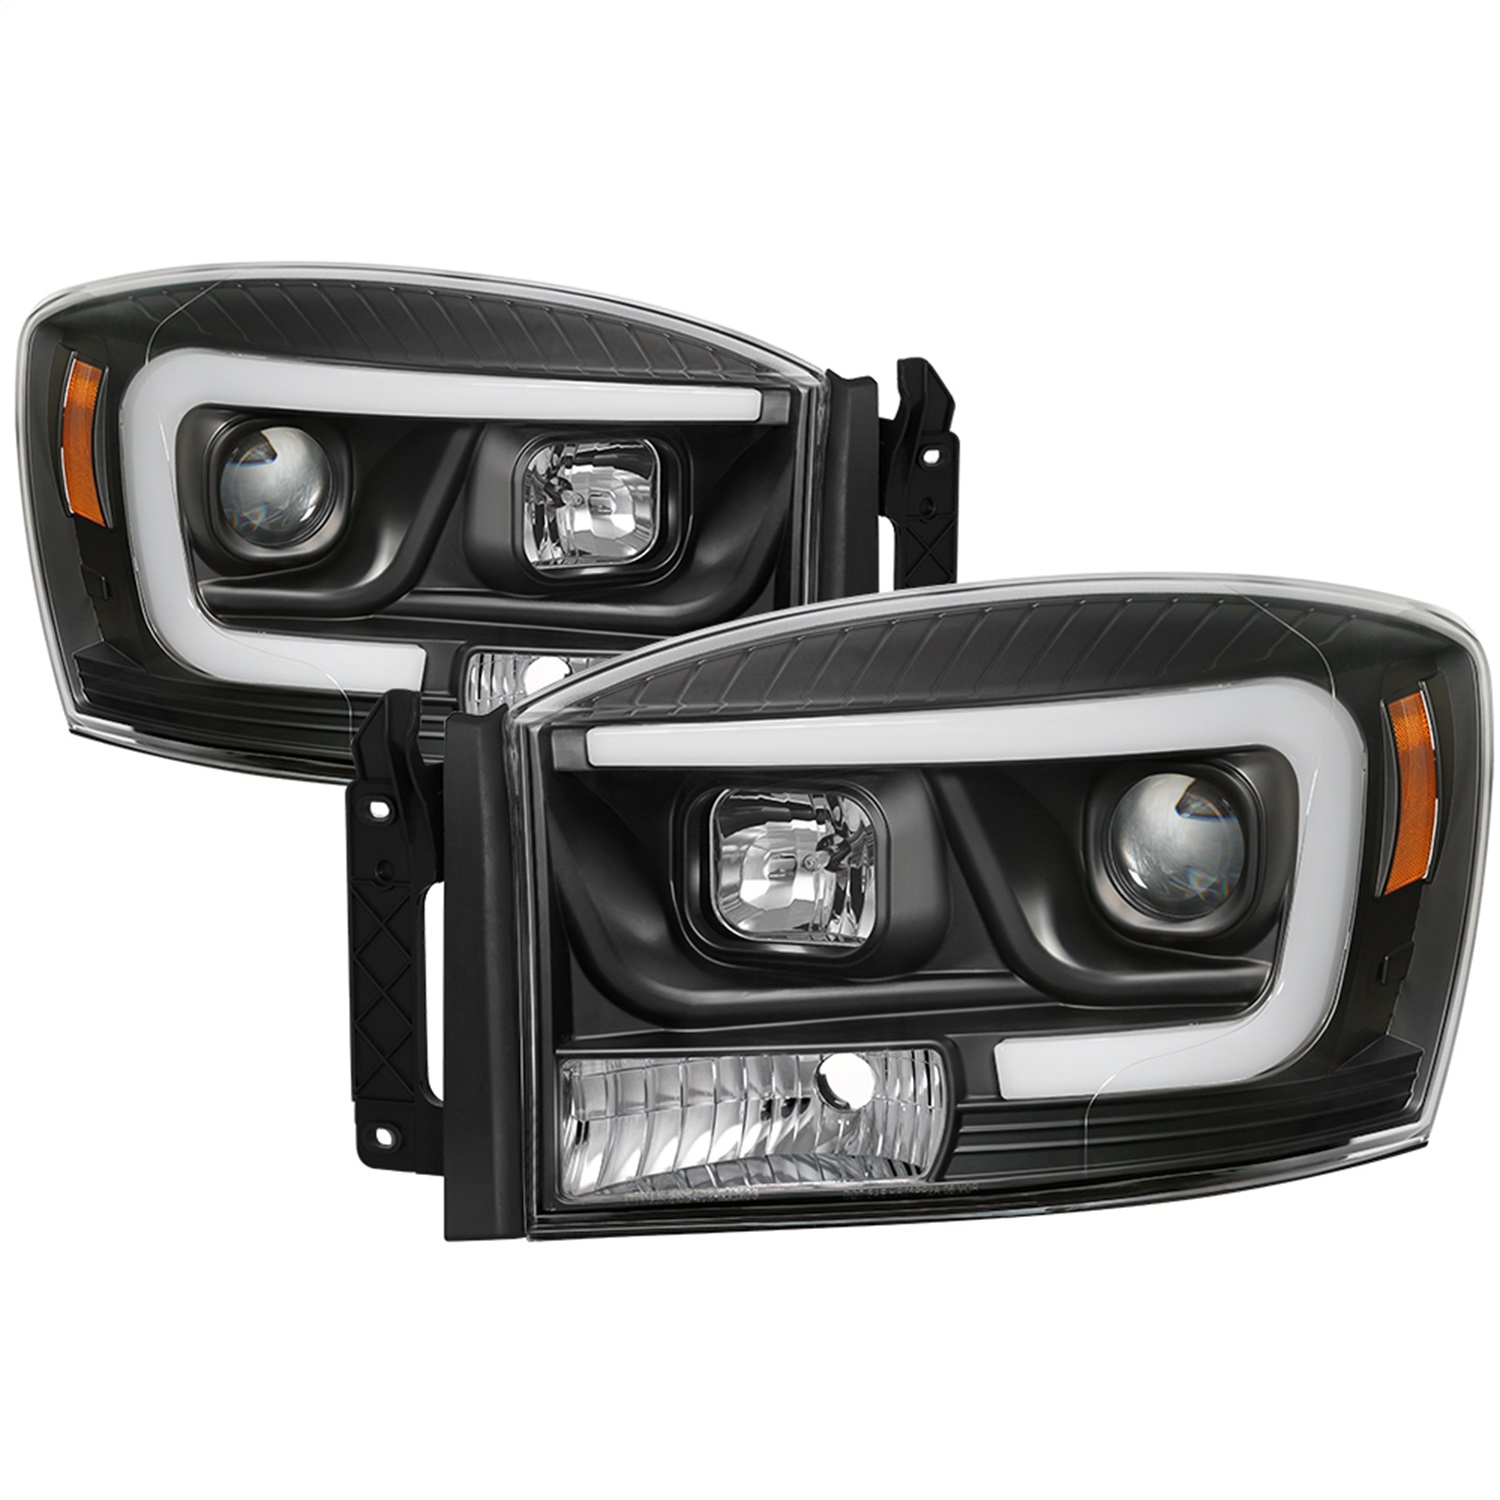 Spyder Auto 5085306 Projector Headlights Fits 06-09 Ram 1500 Ram 2500 Ram 3500